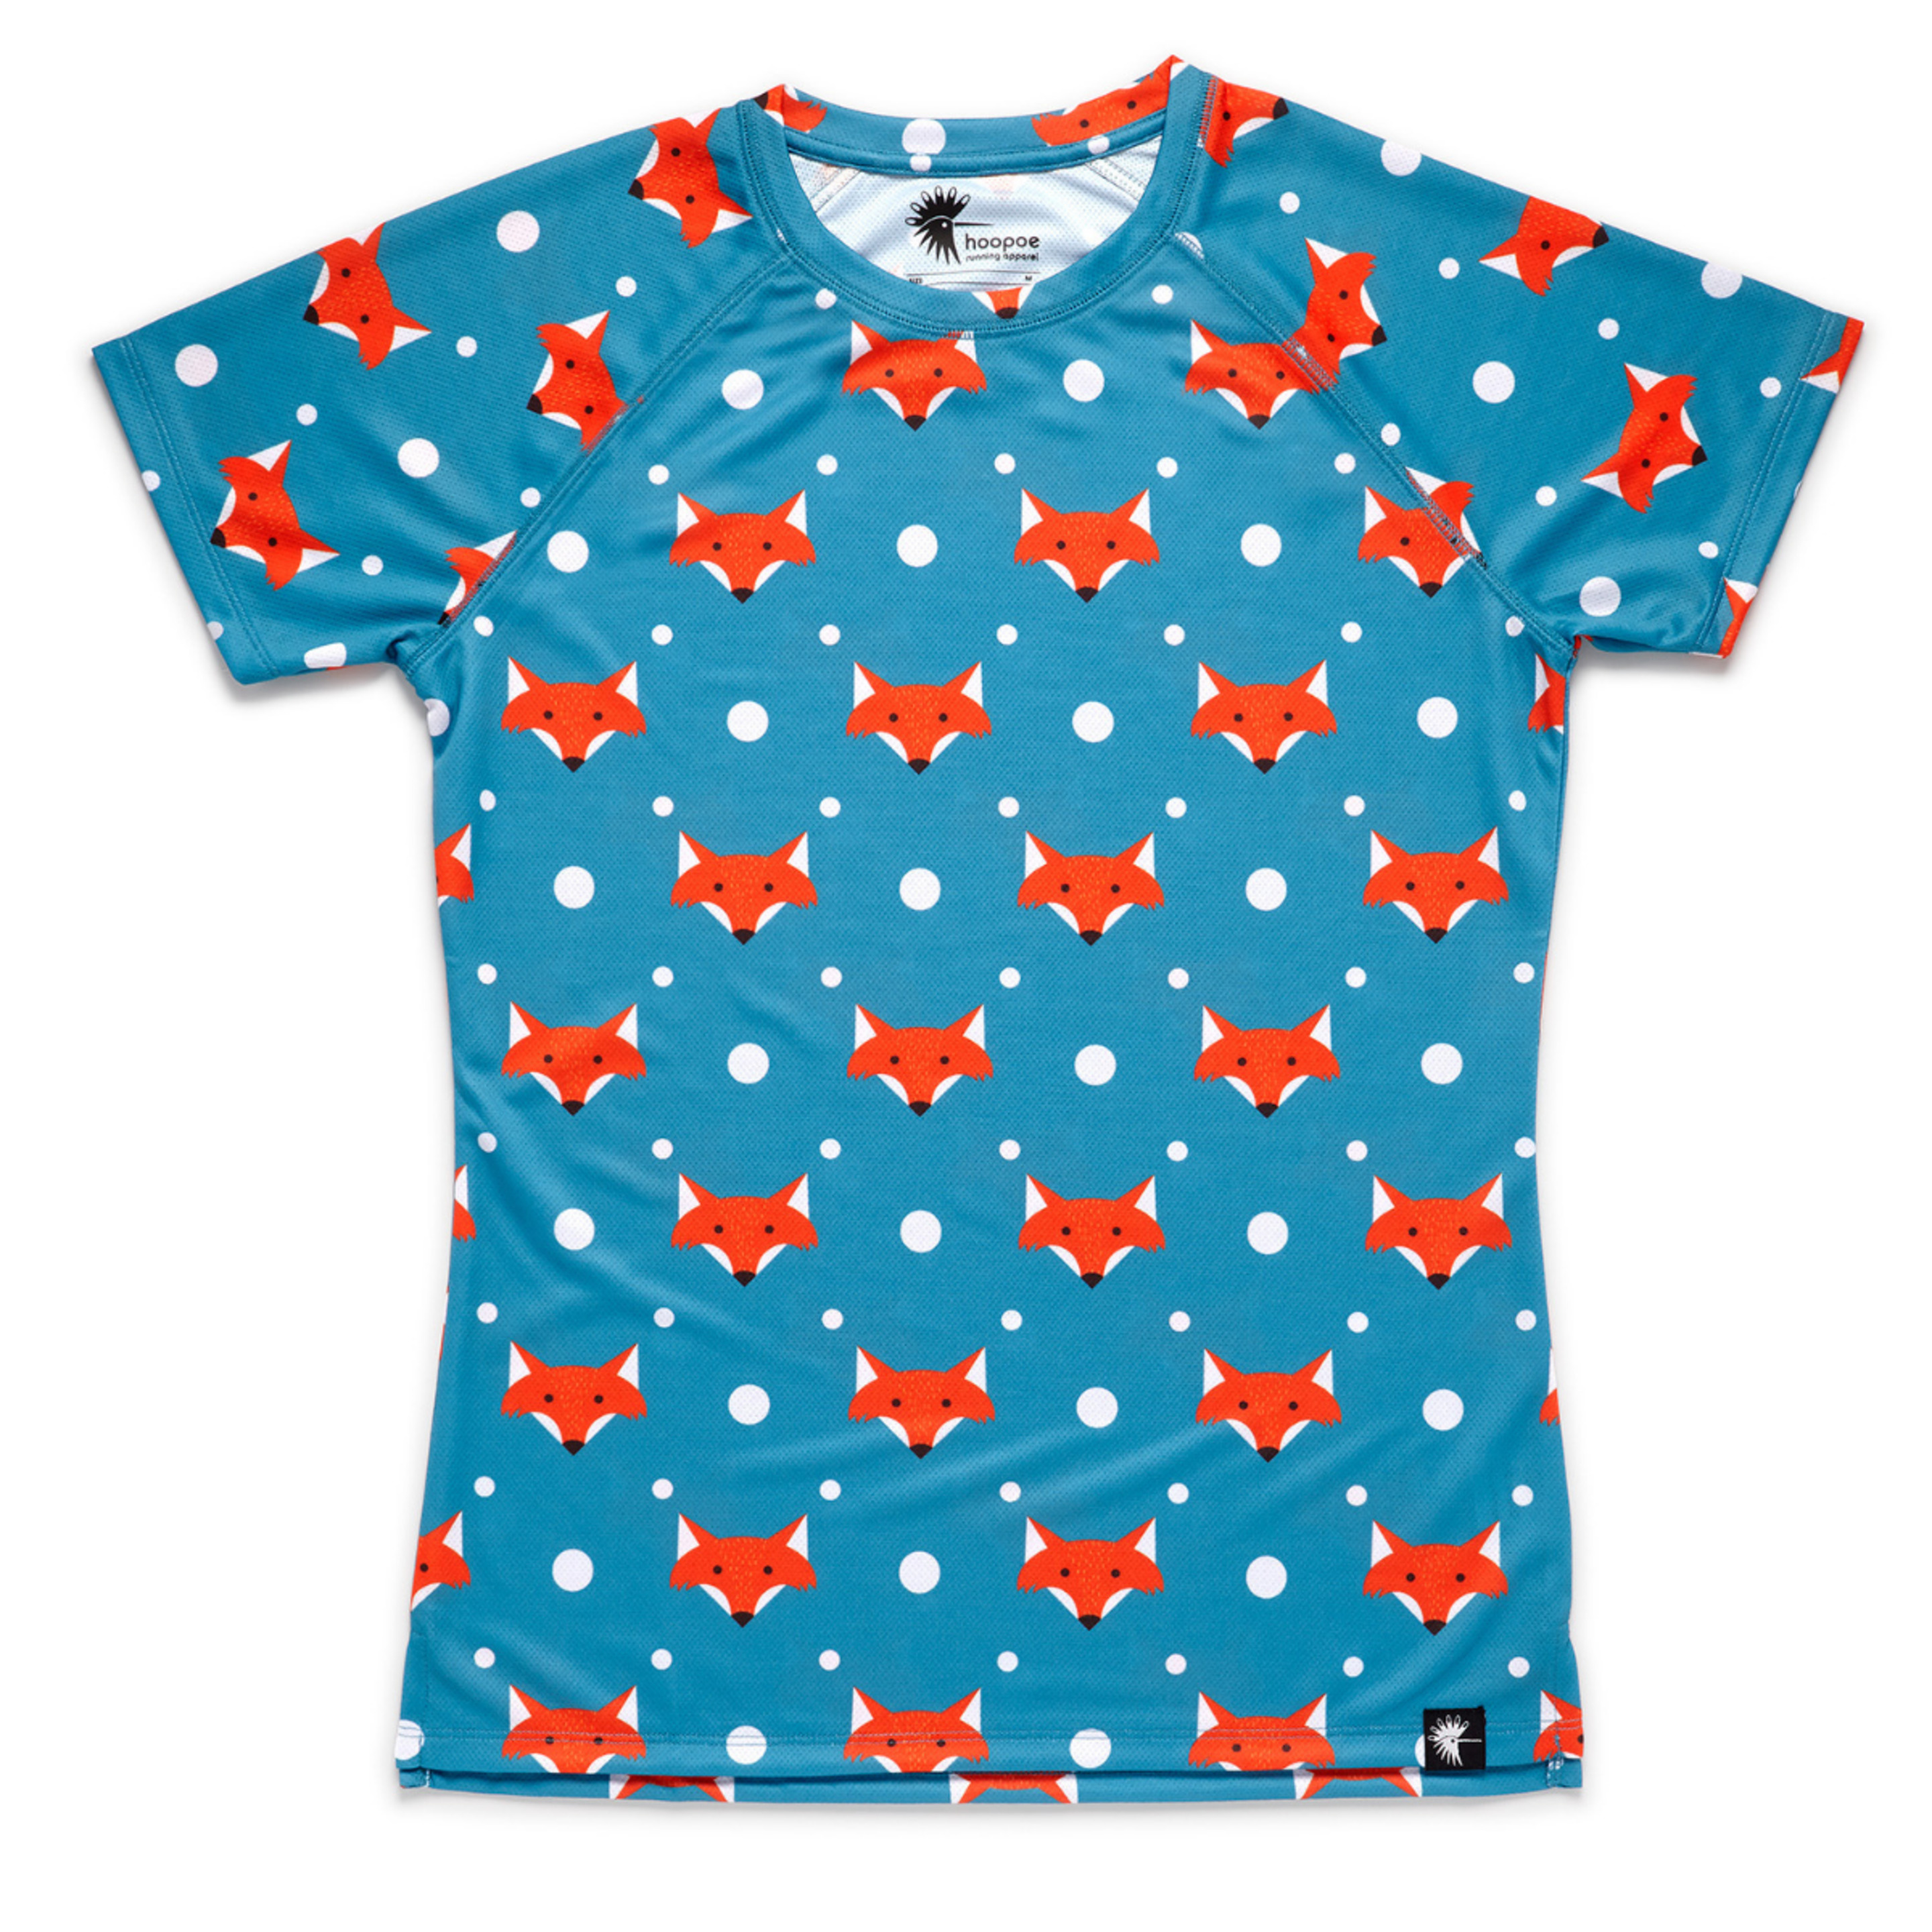 Camiseta De Running Foxblue Hoopoe Apparel - azul - 